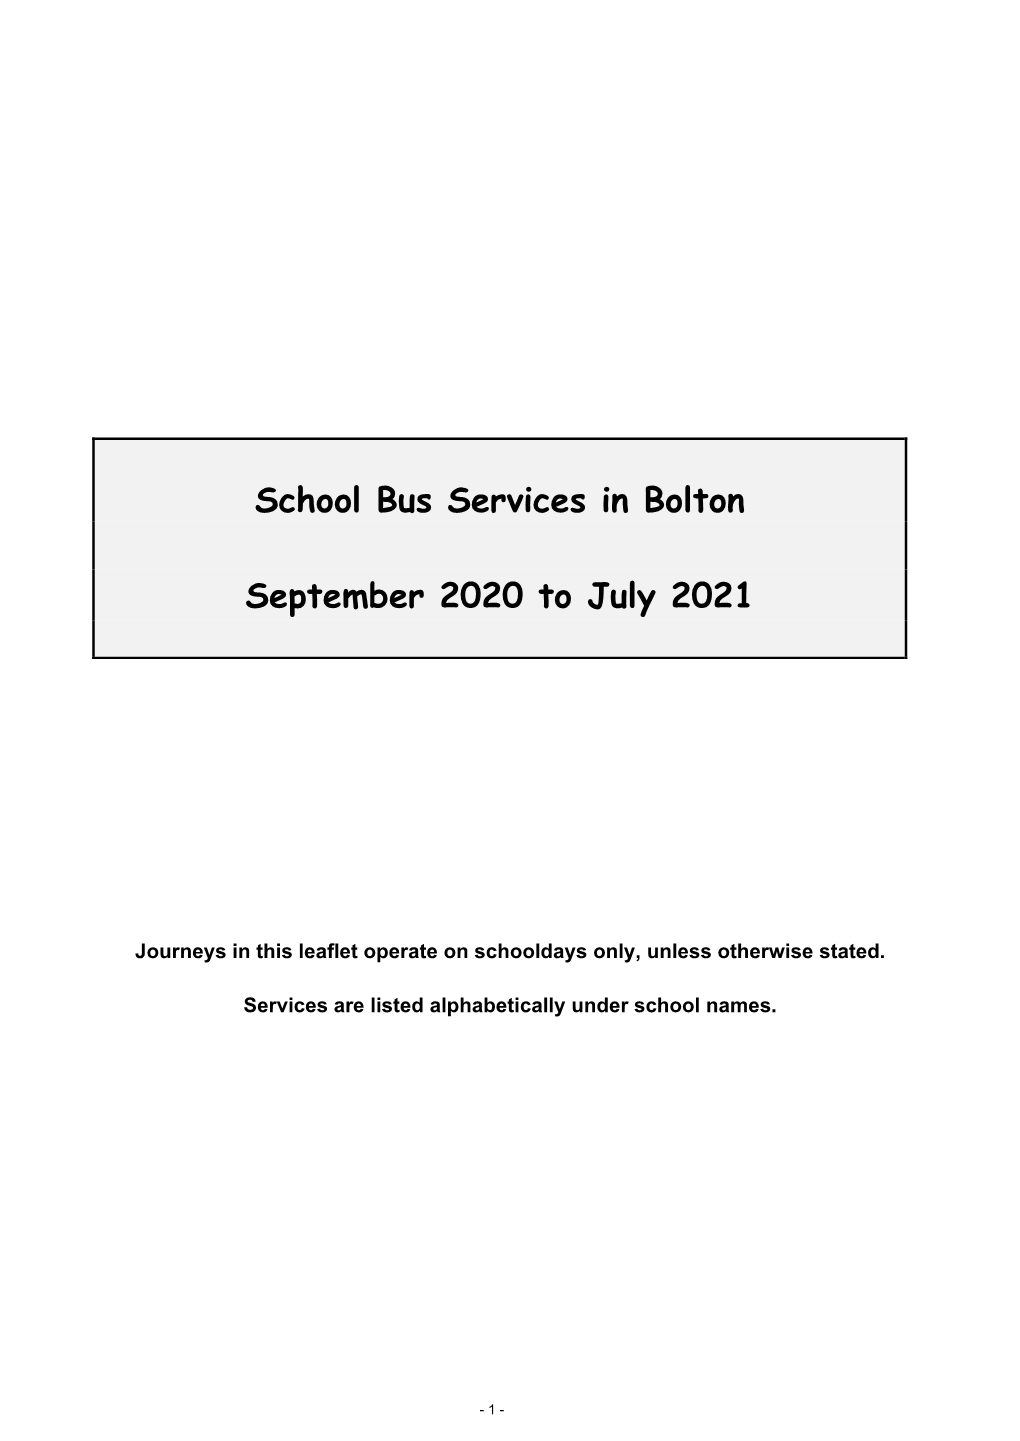 Turton School Bus Services TFGM 2020-2021